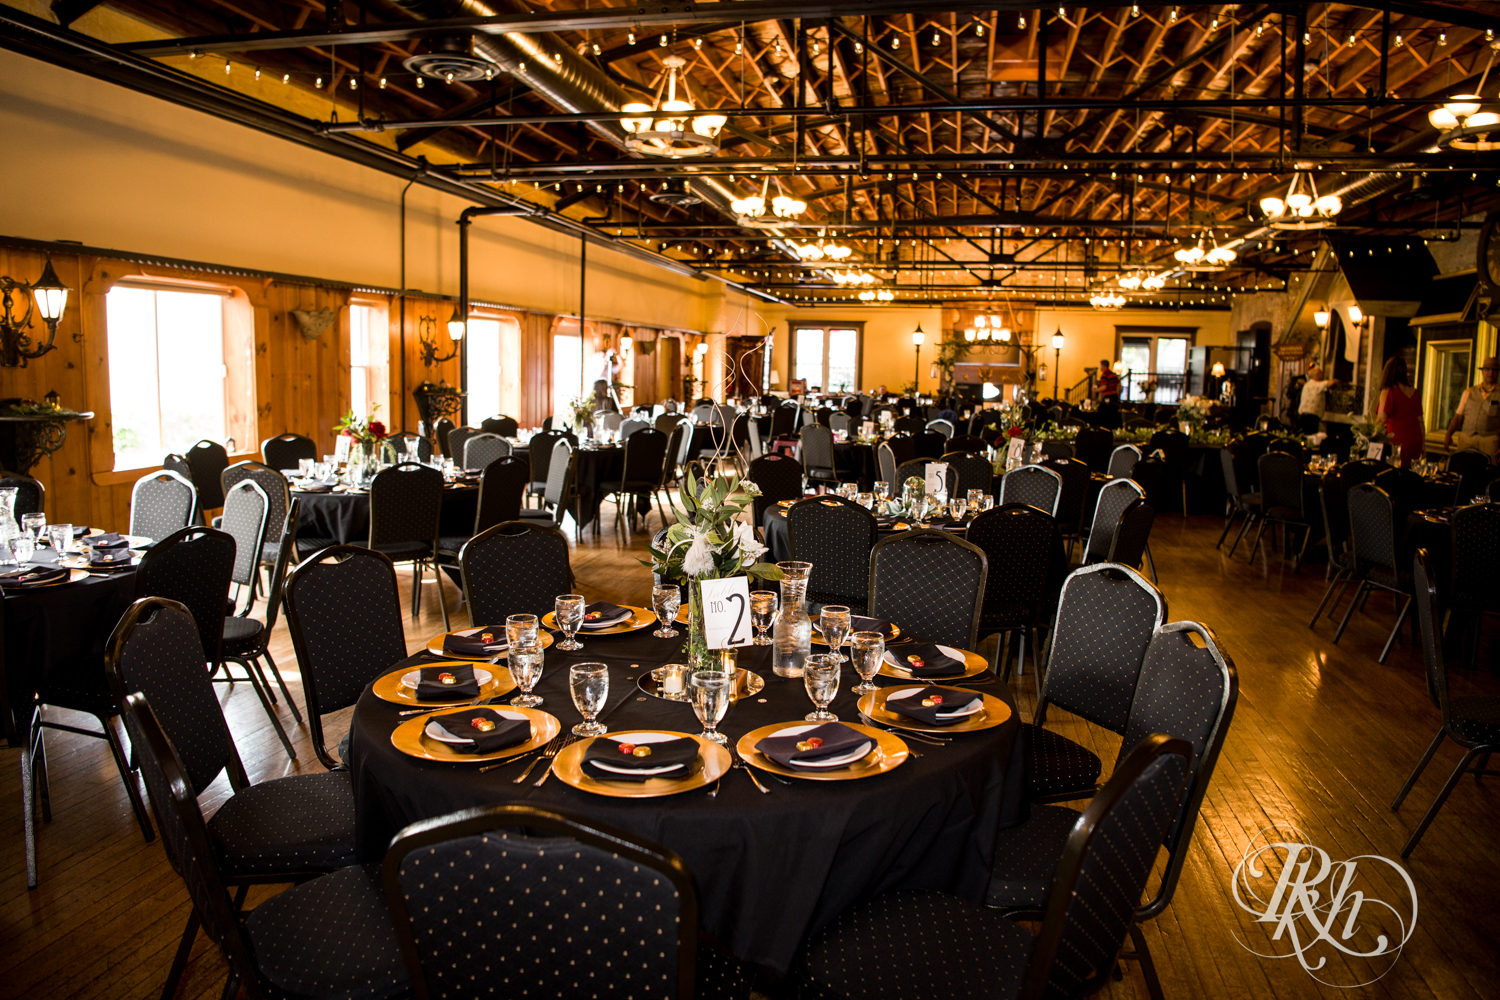 Indoor wedding reception setup at Kellerman's Event Center in White Bear Lake, Minnesota.